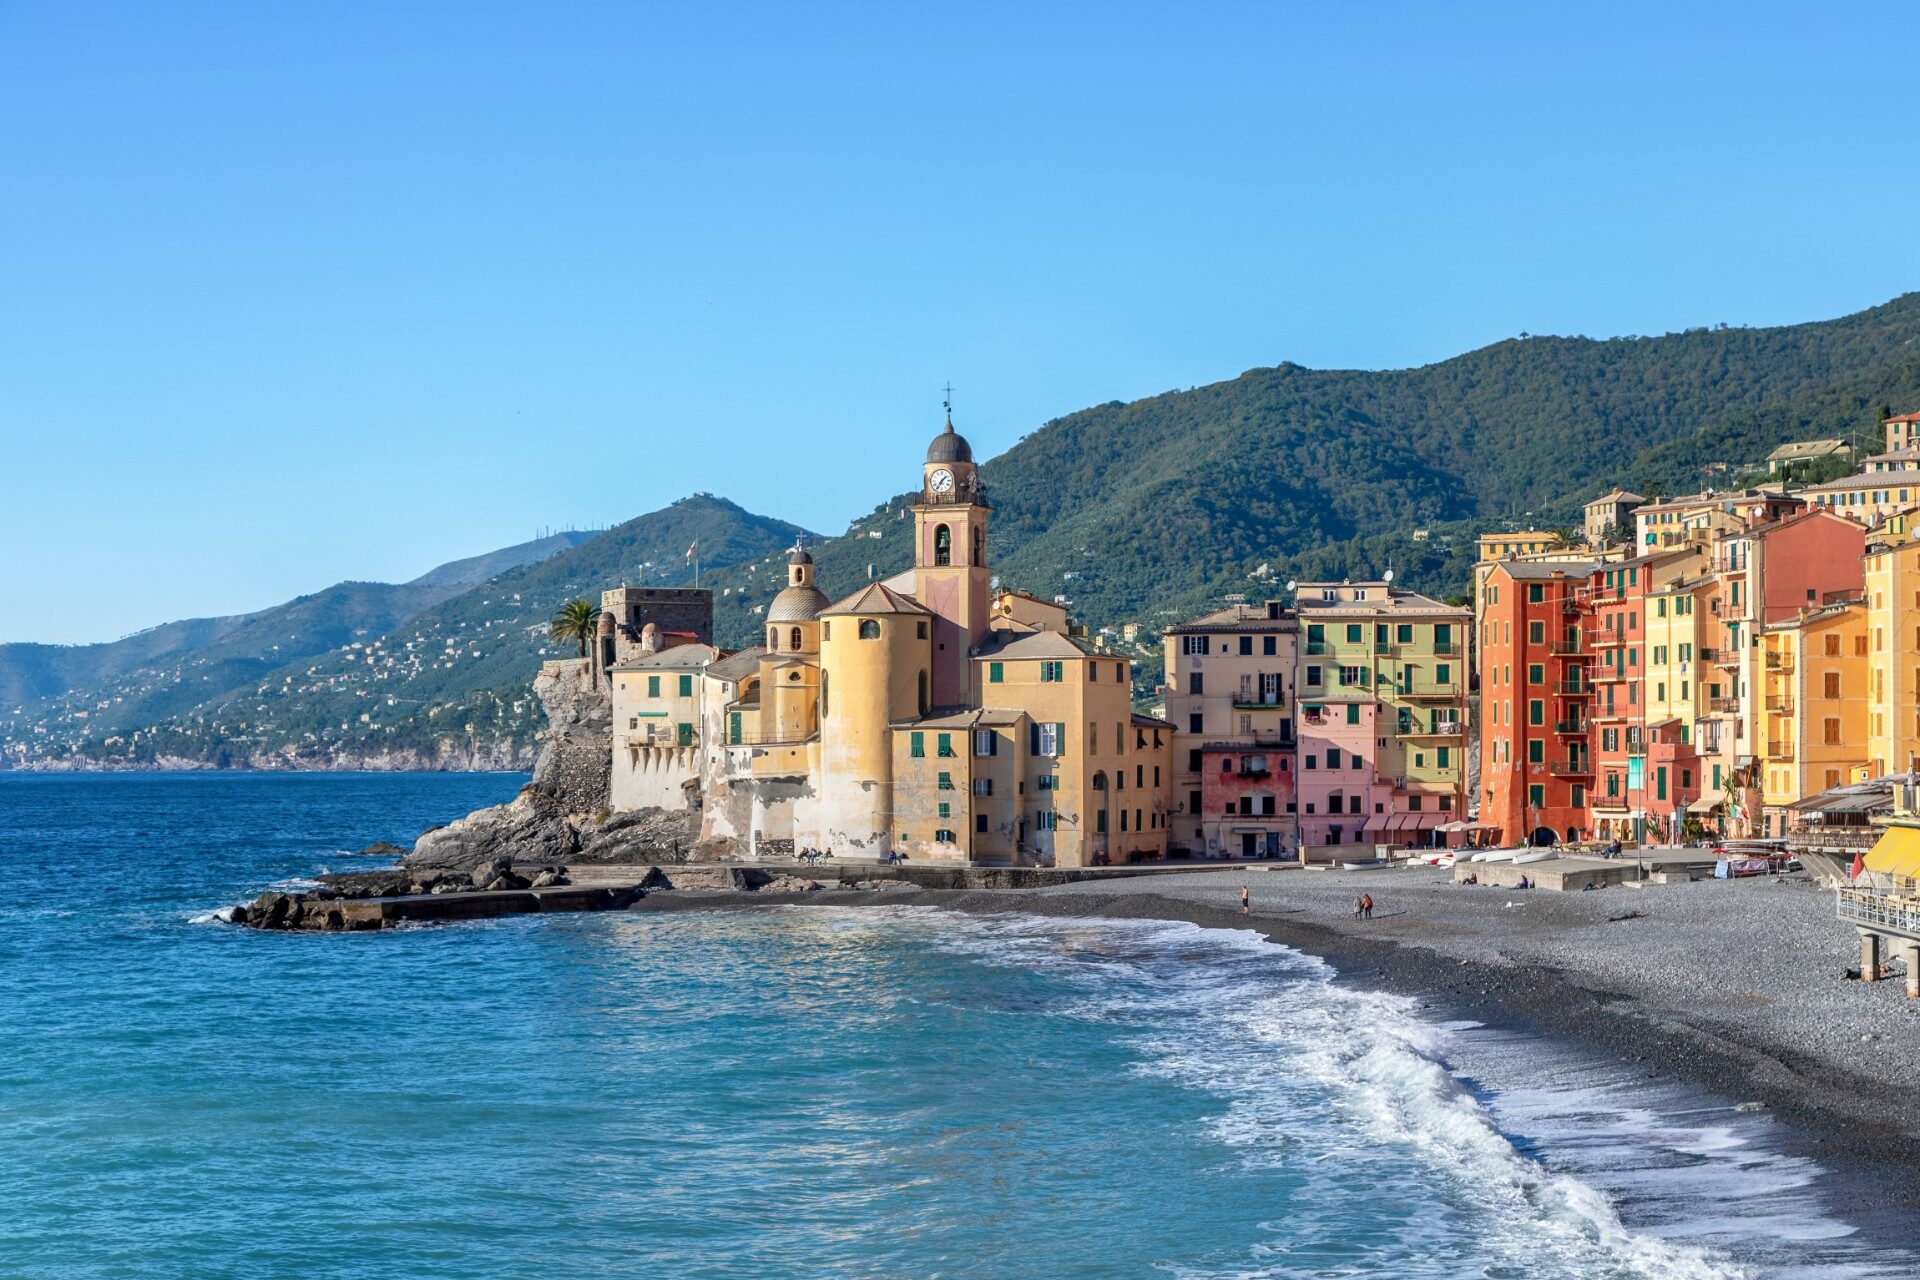 Italian Open Water Tour in Genoa